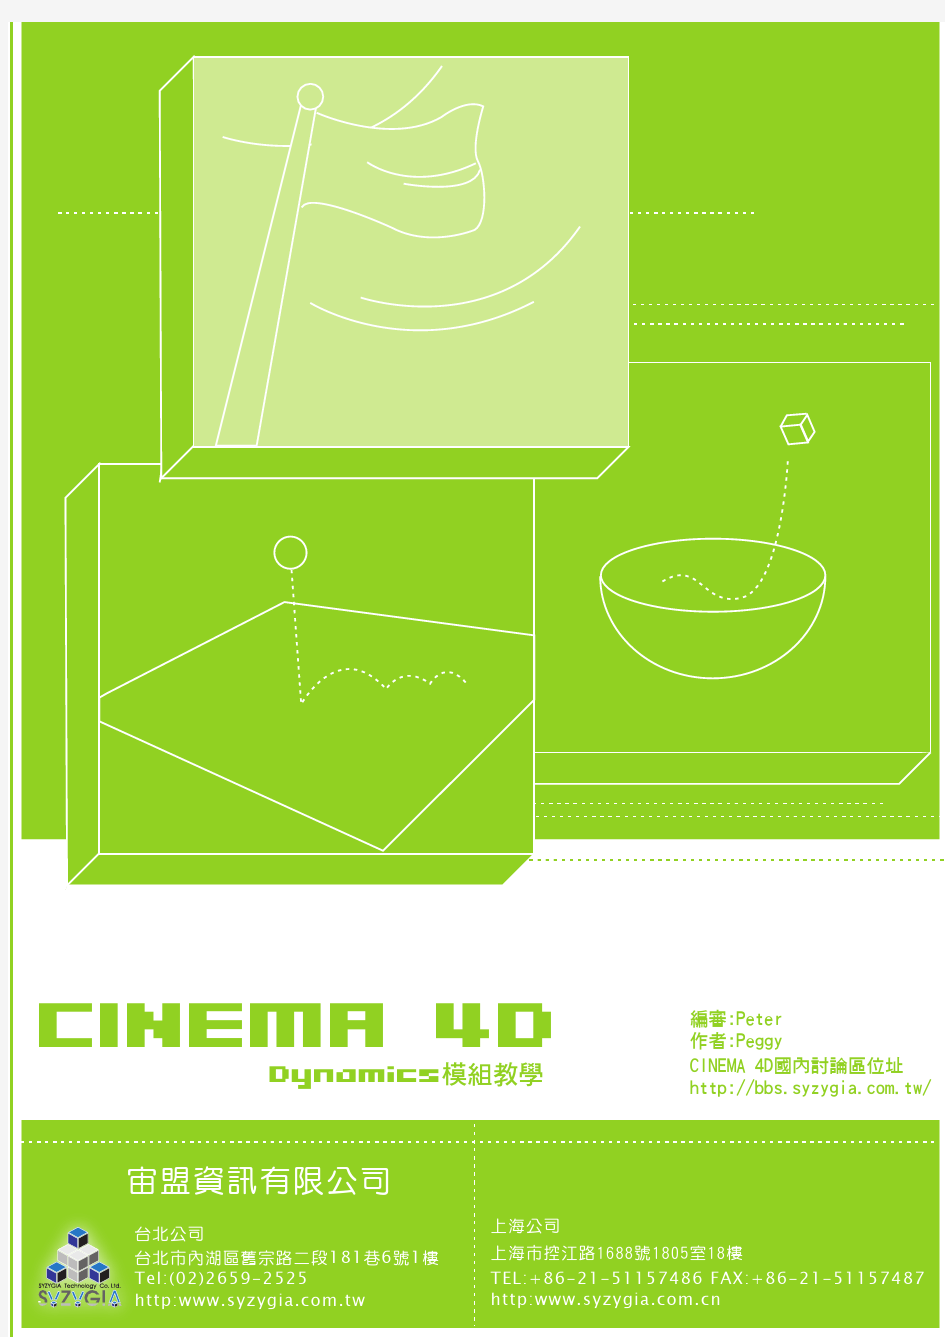 Cinema.4D